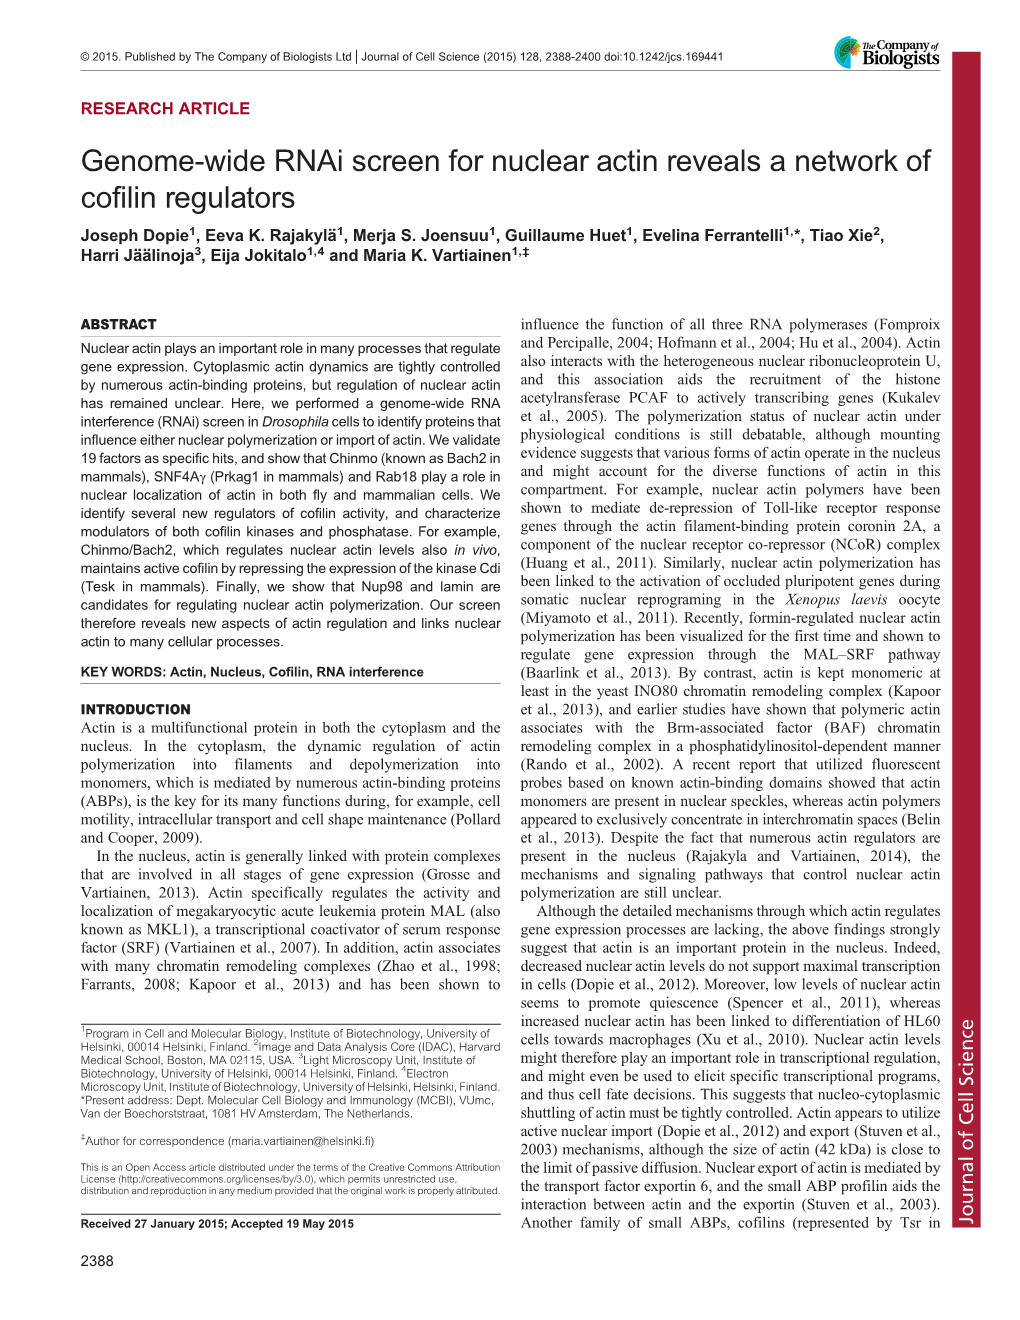 Genome-Wide Rnai Screen for Nuclear Actin Reveals a Network of Cofilin Regulators Joseph Dopie1, Eeva K